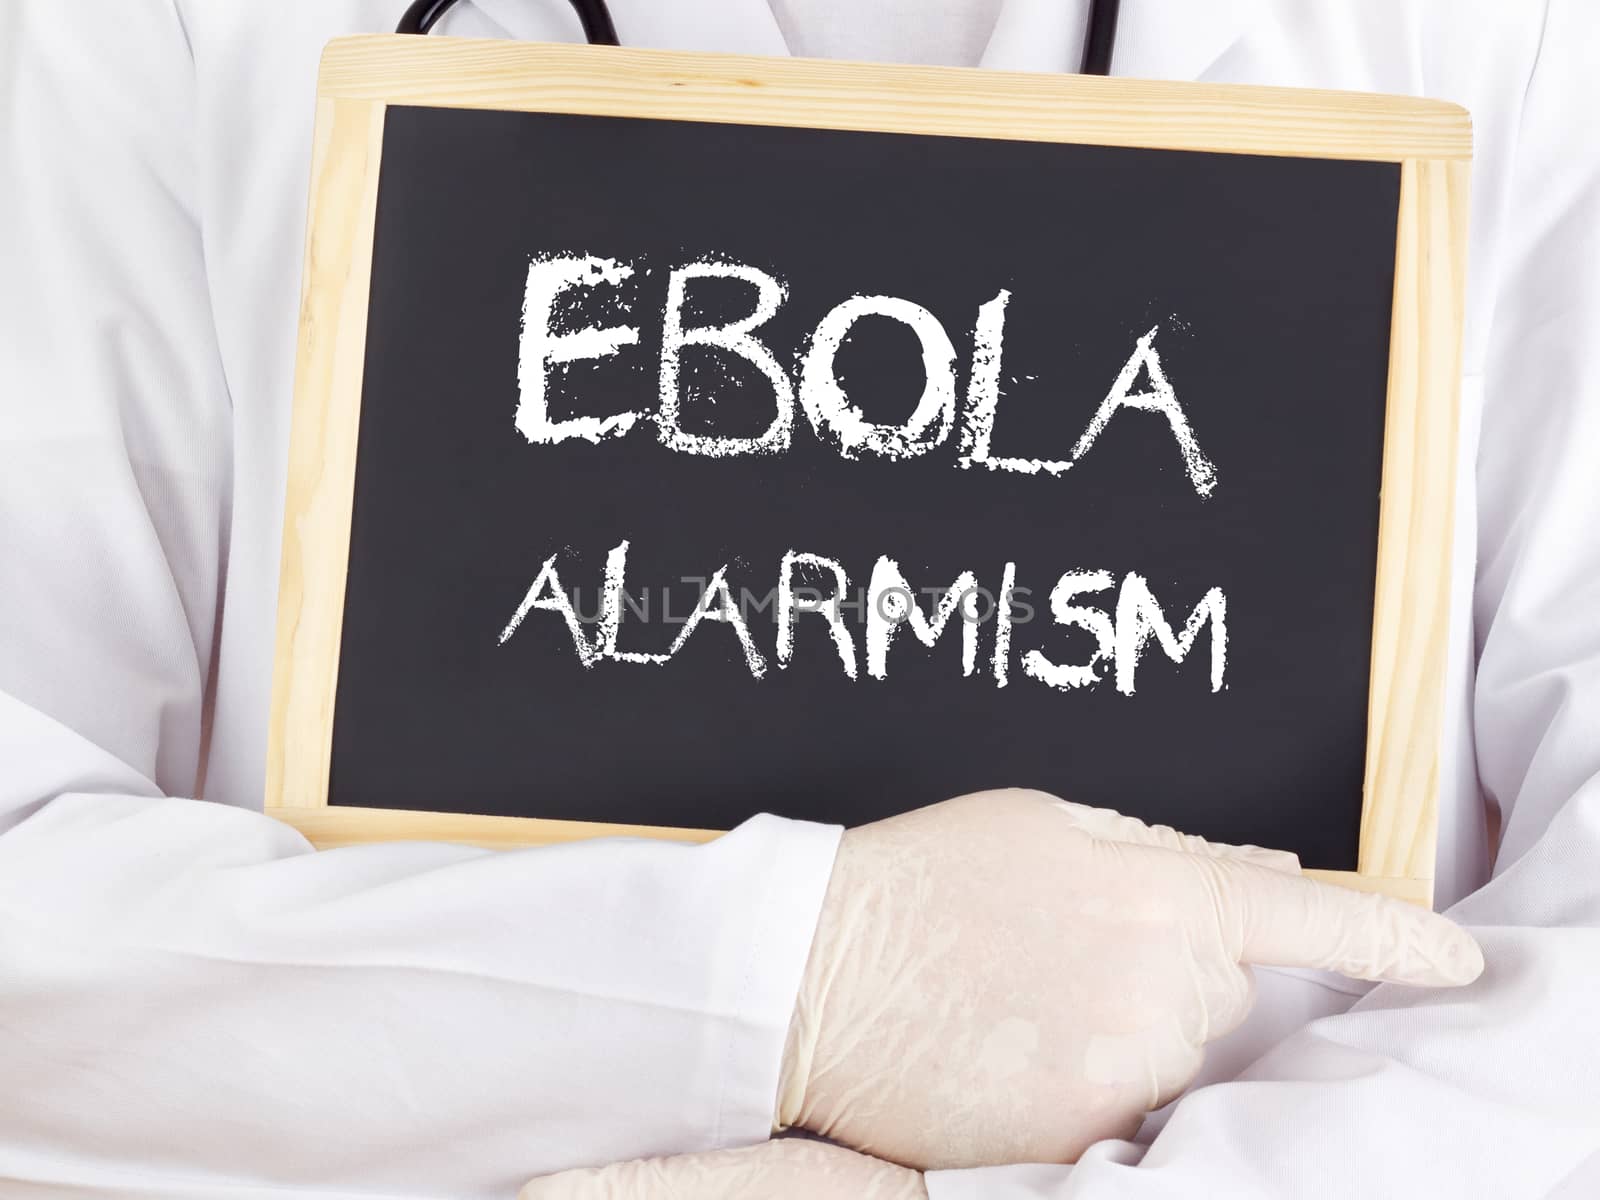 Doctor shows information: Ebola alarmism